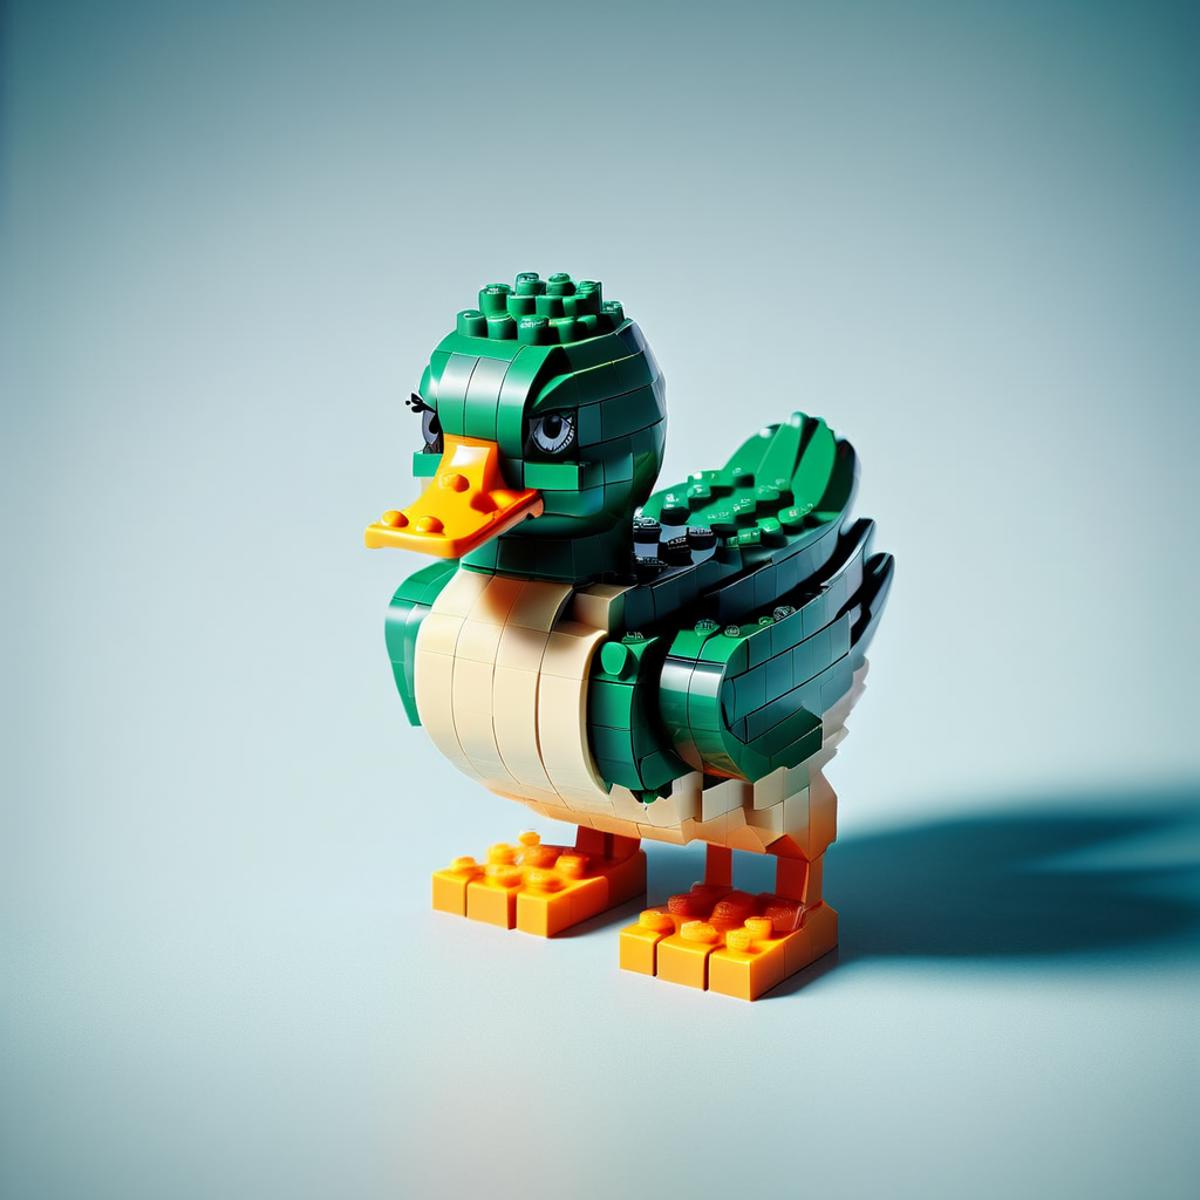 LegoXL image by nocor1i8